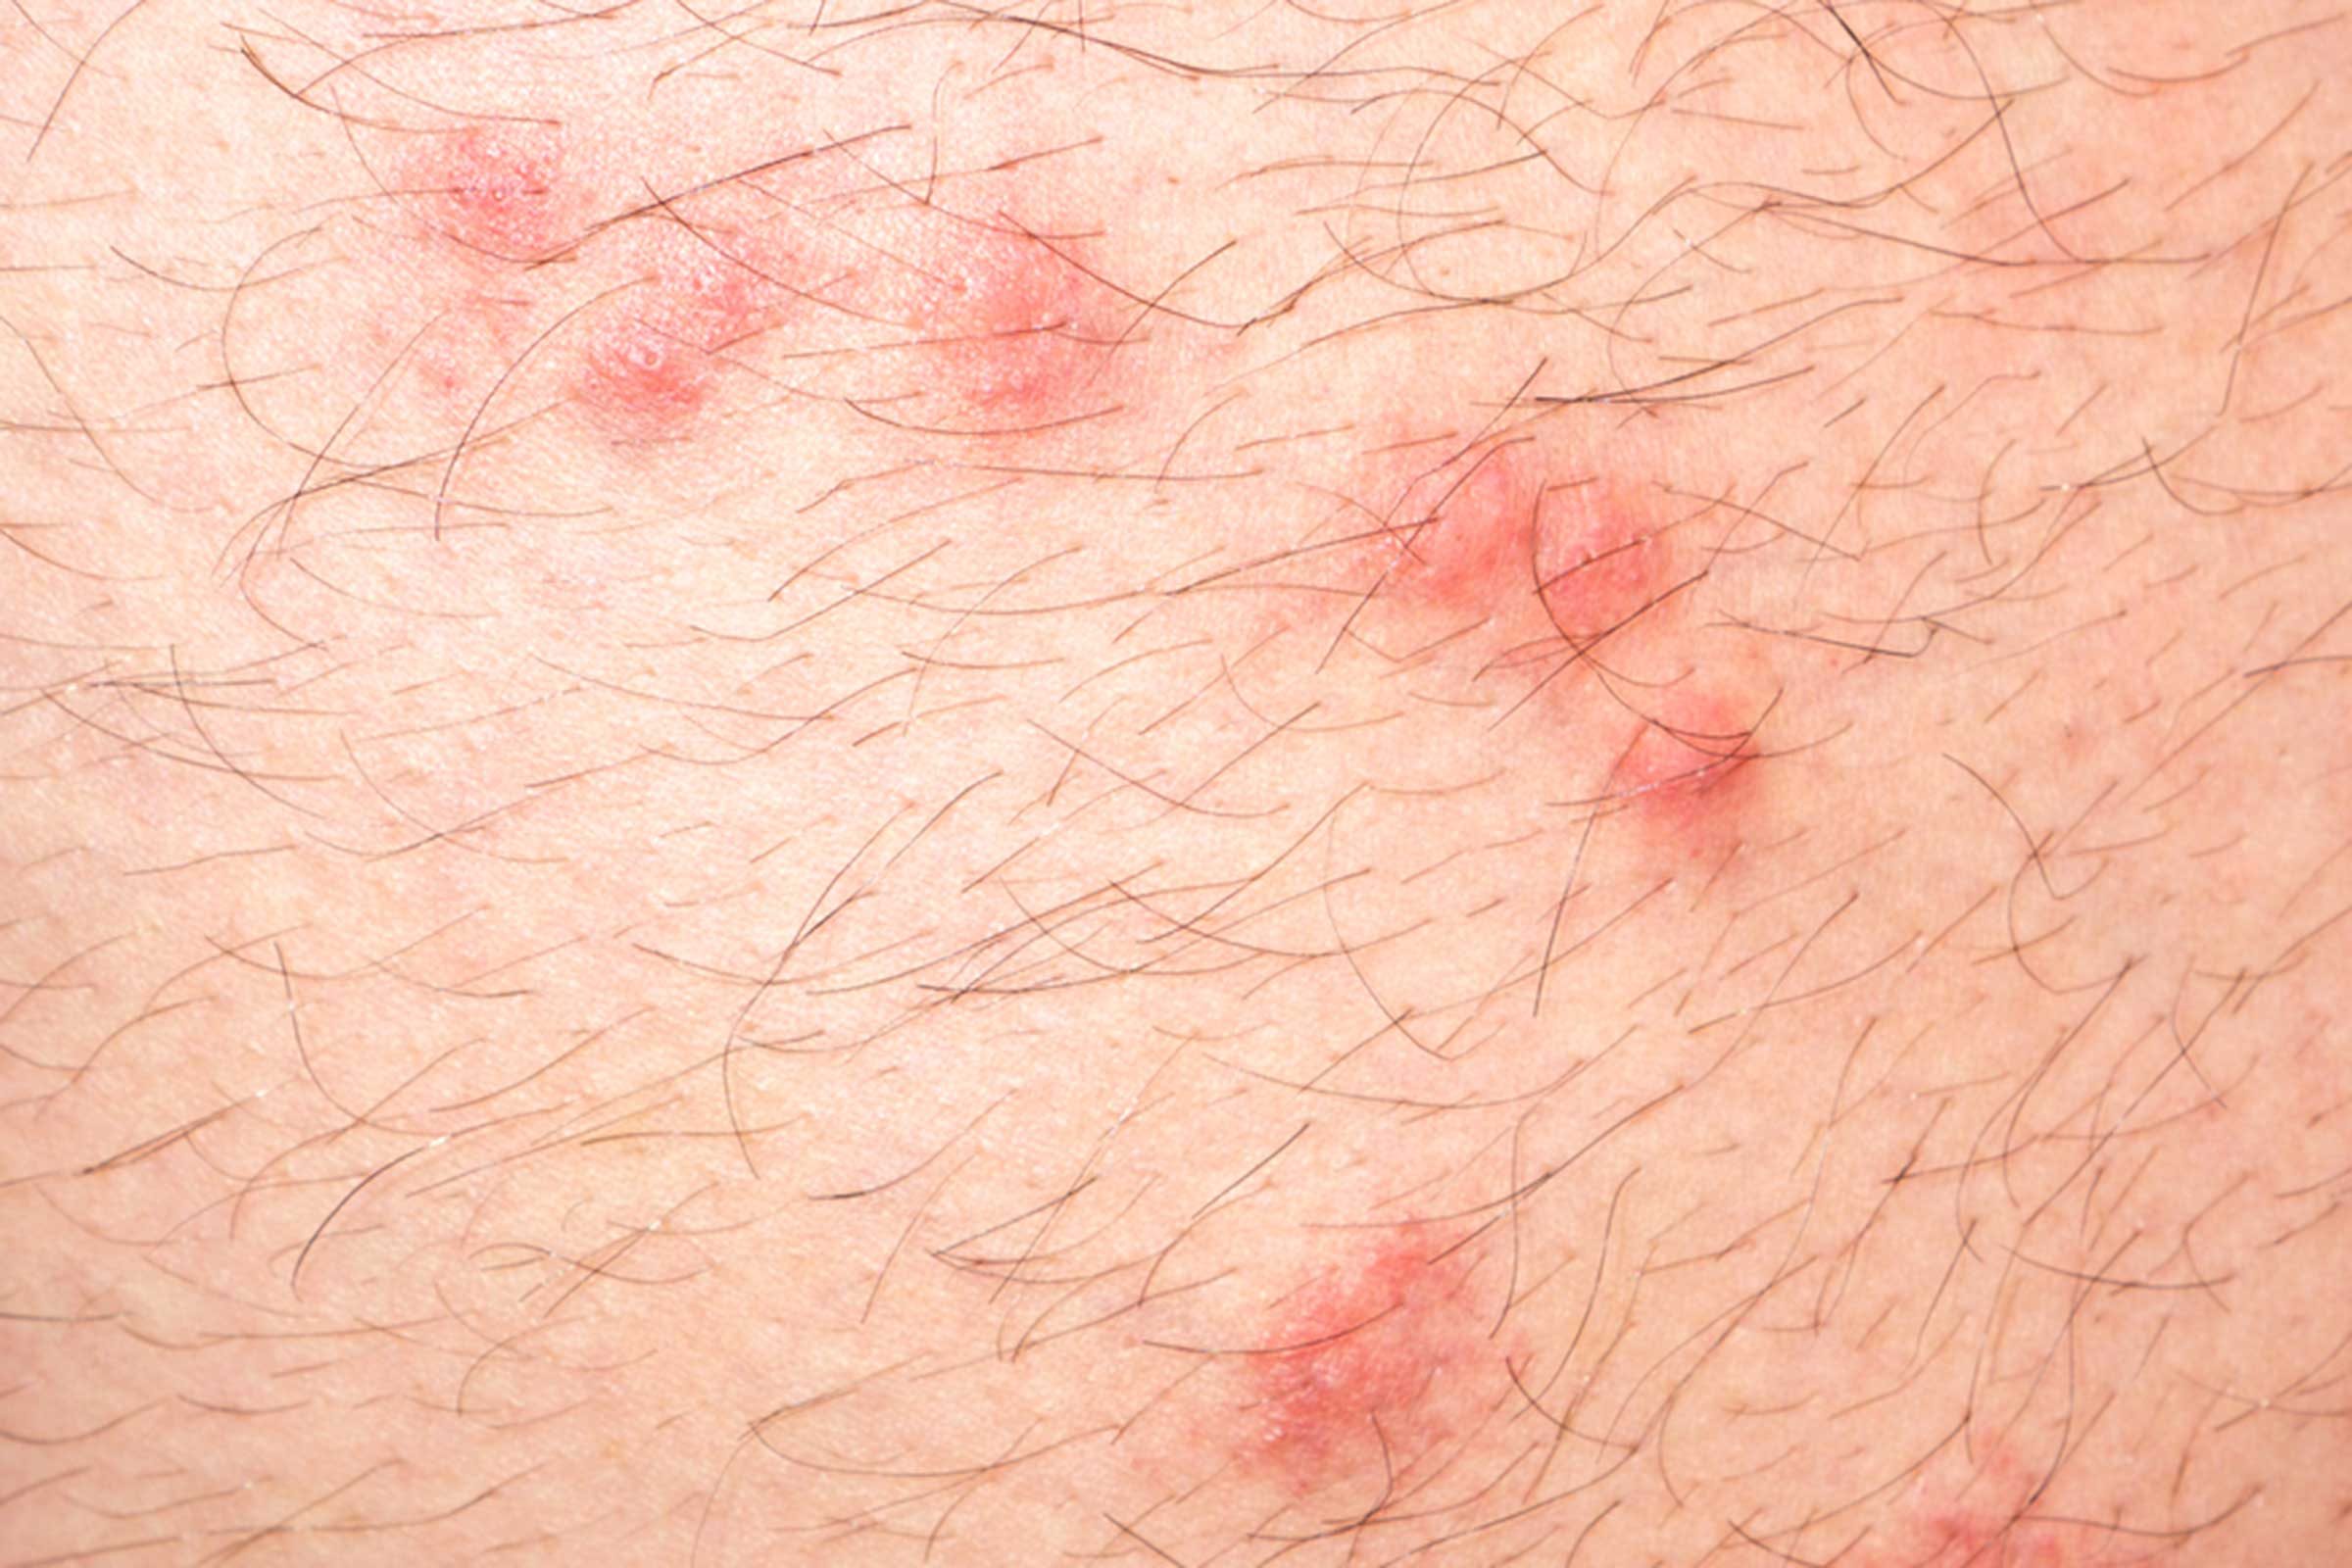 close up of flea bites on human skin